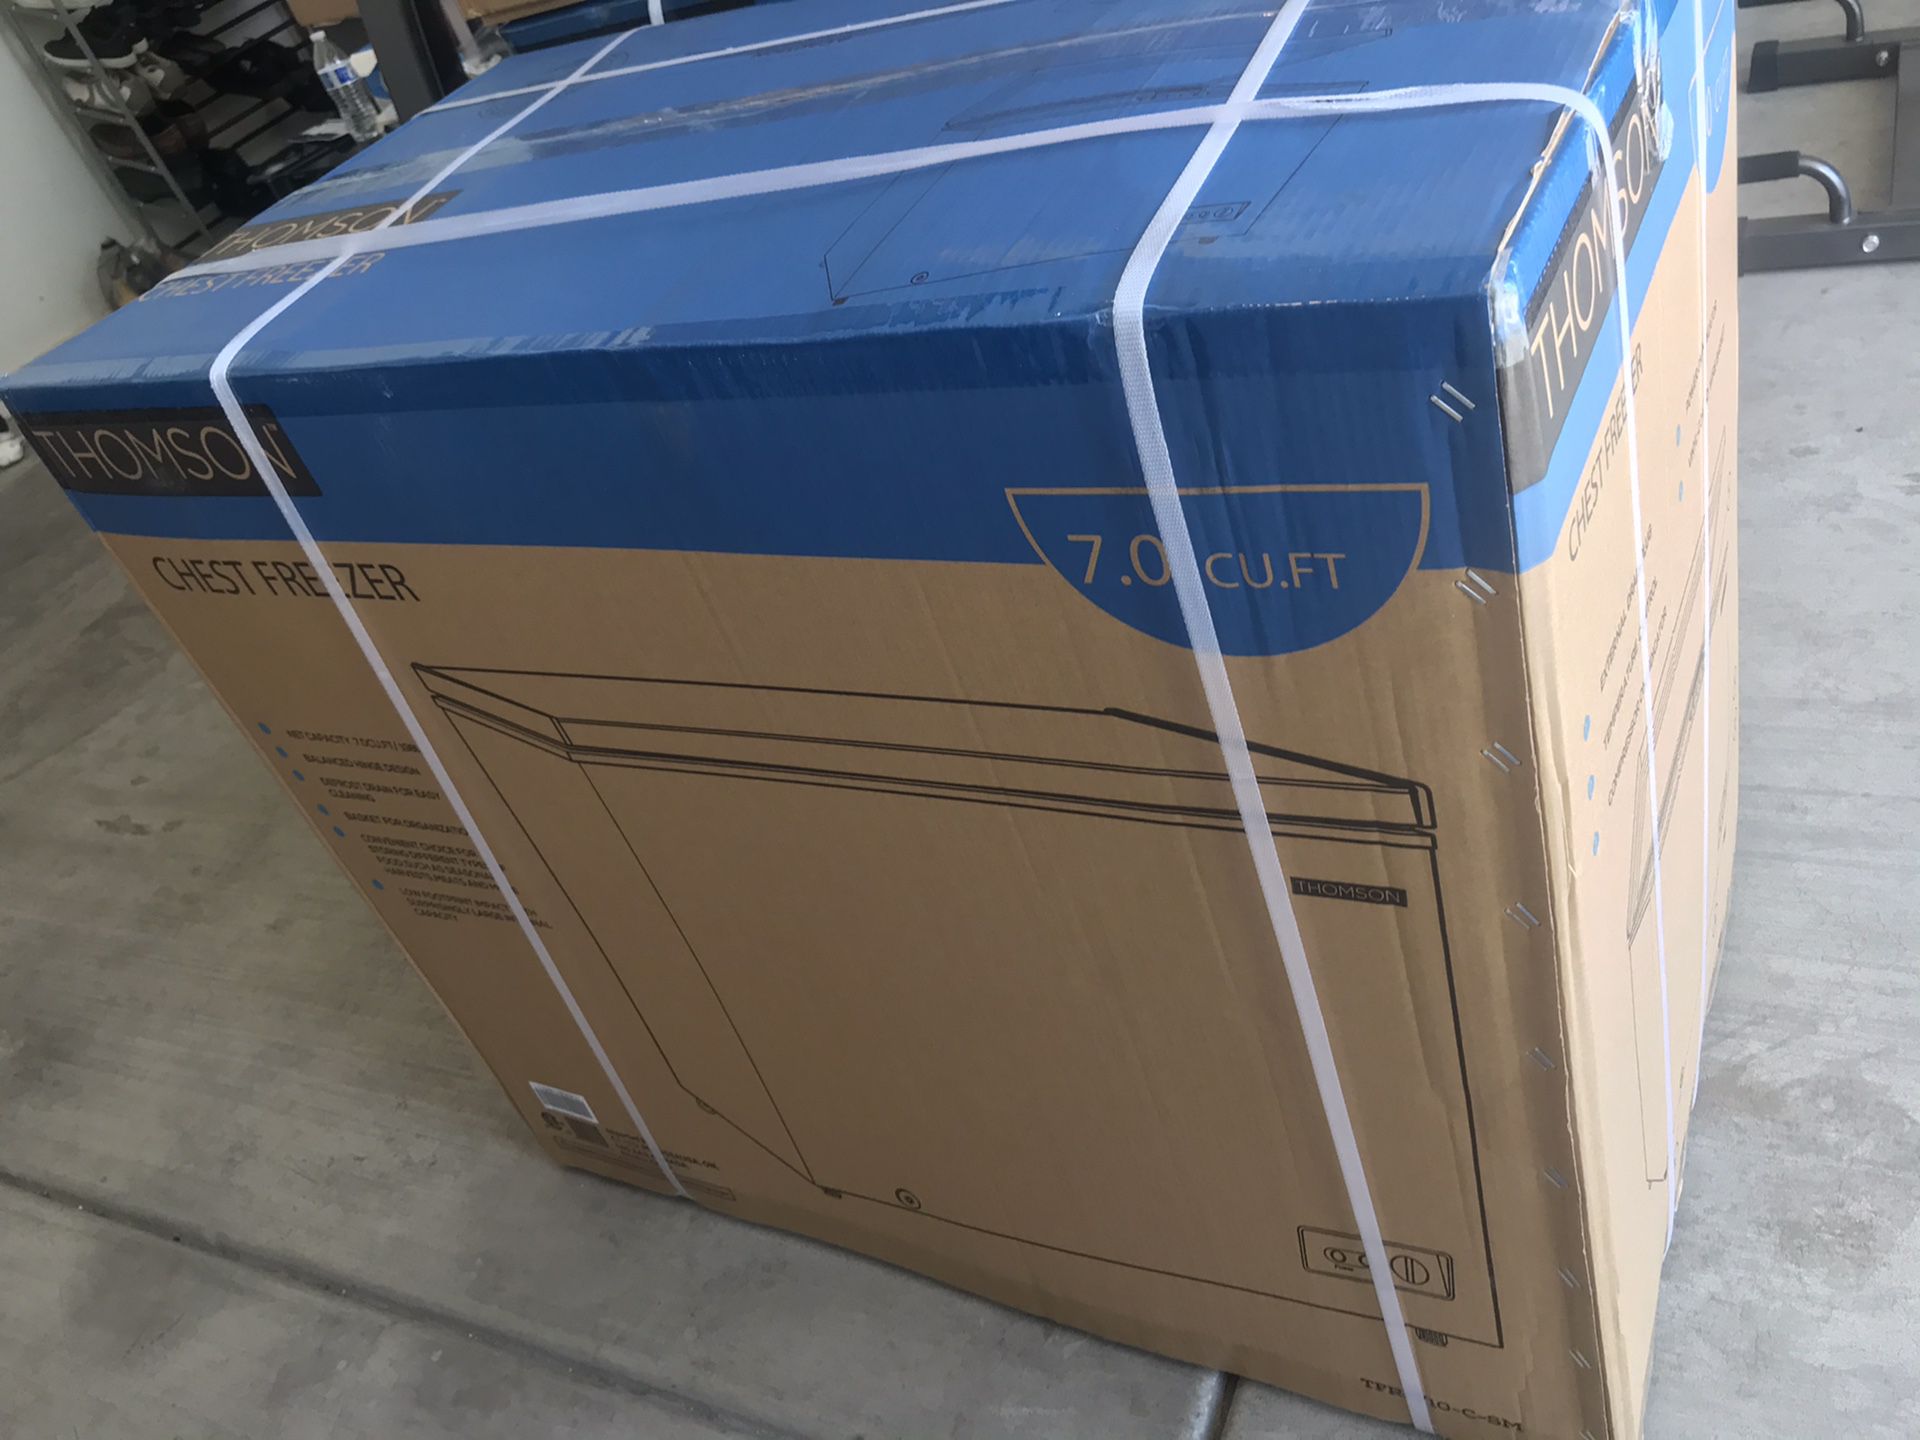 Thomson 7.0 cubic feet chest freezer (brand new)